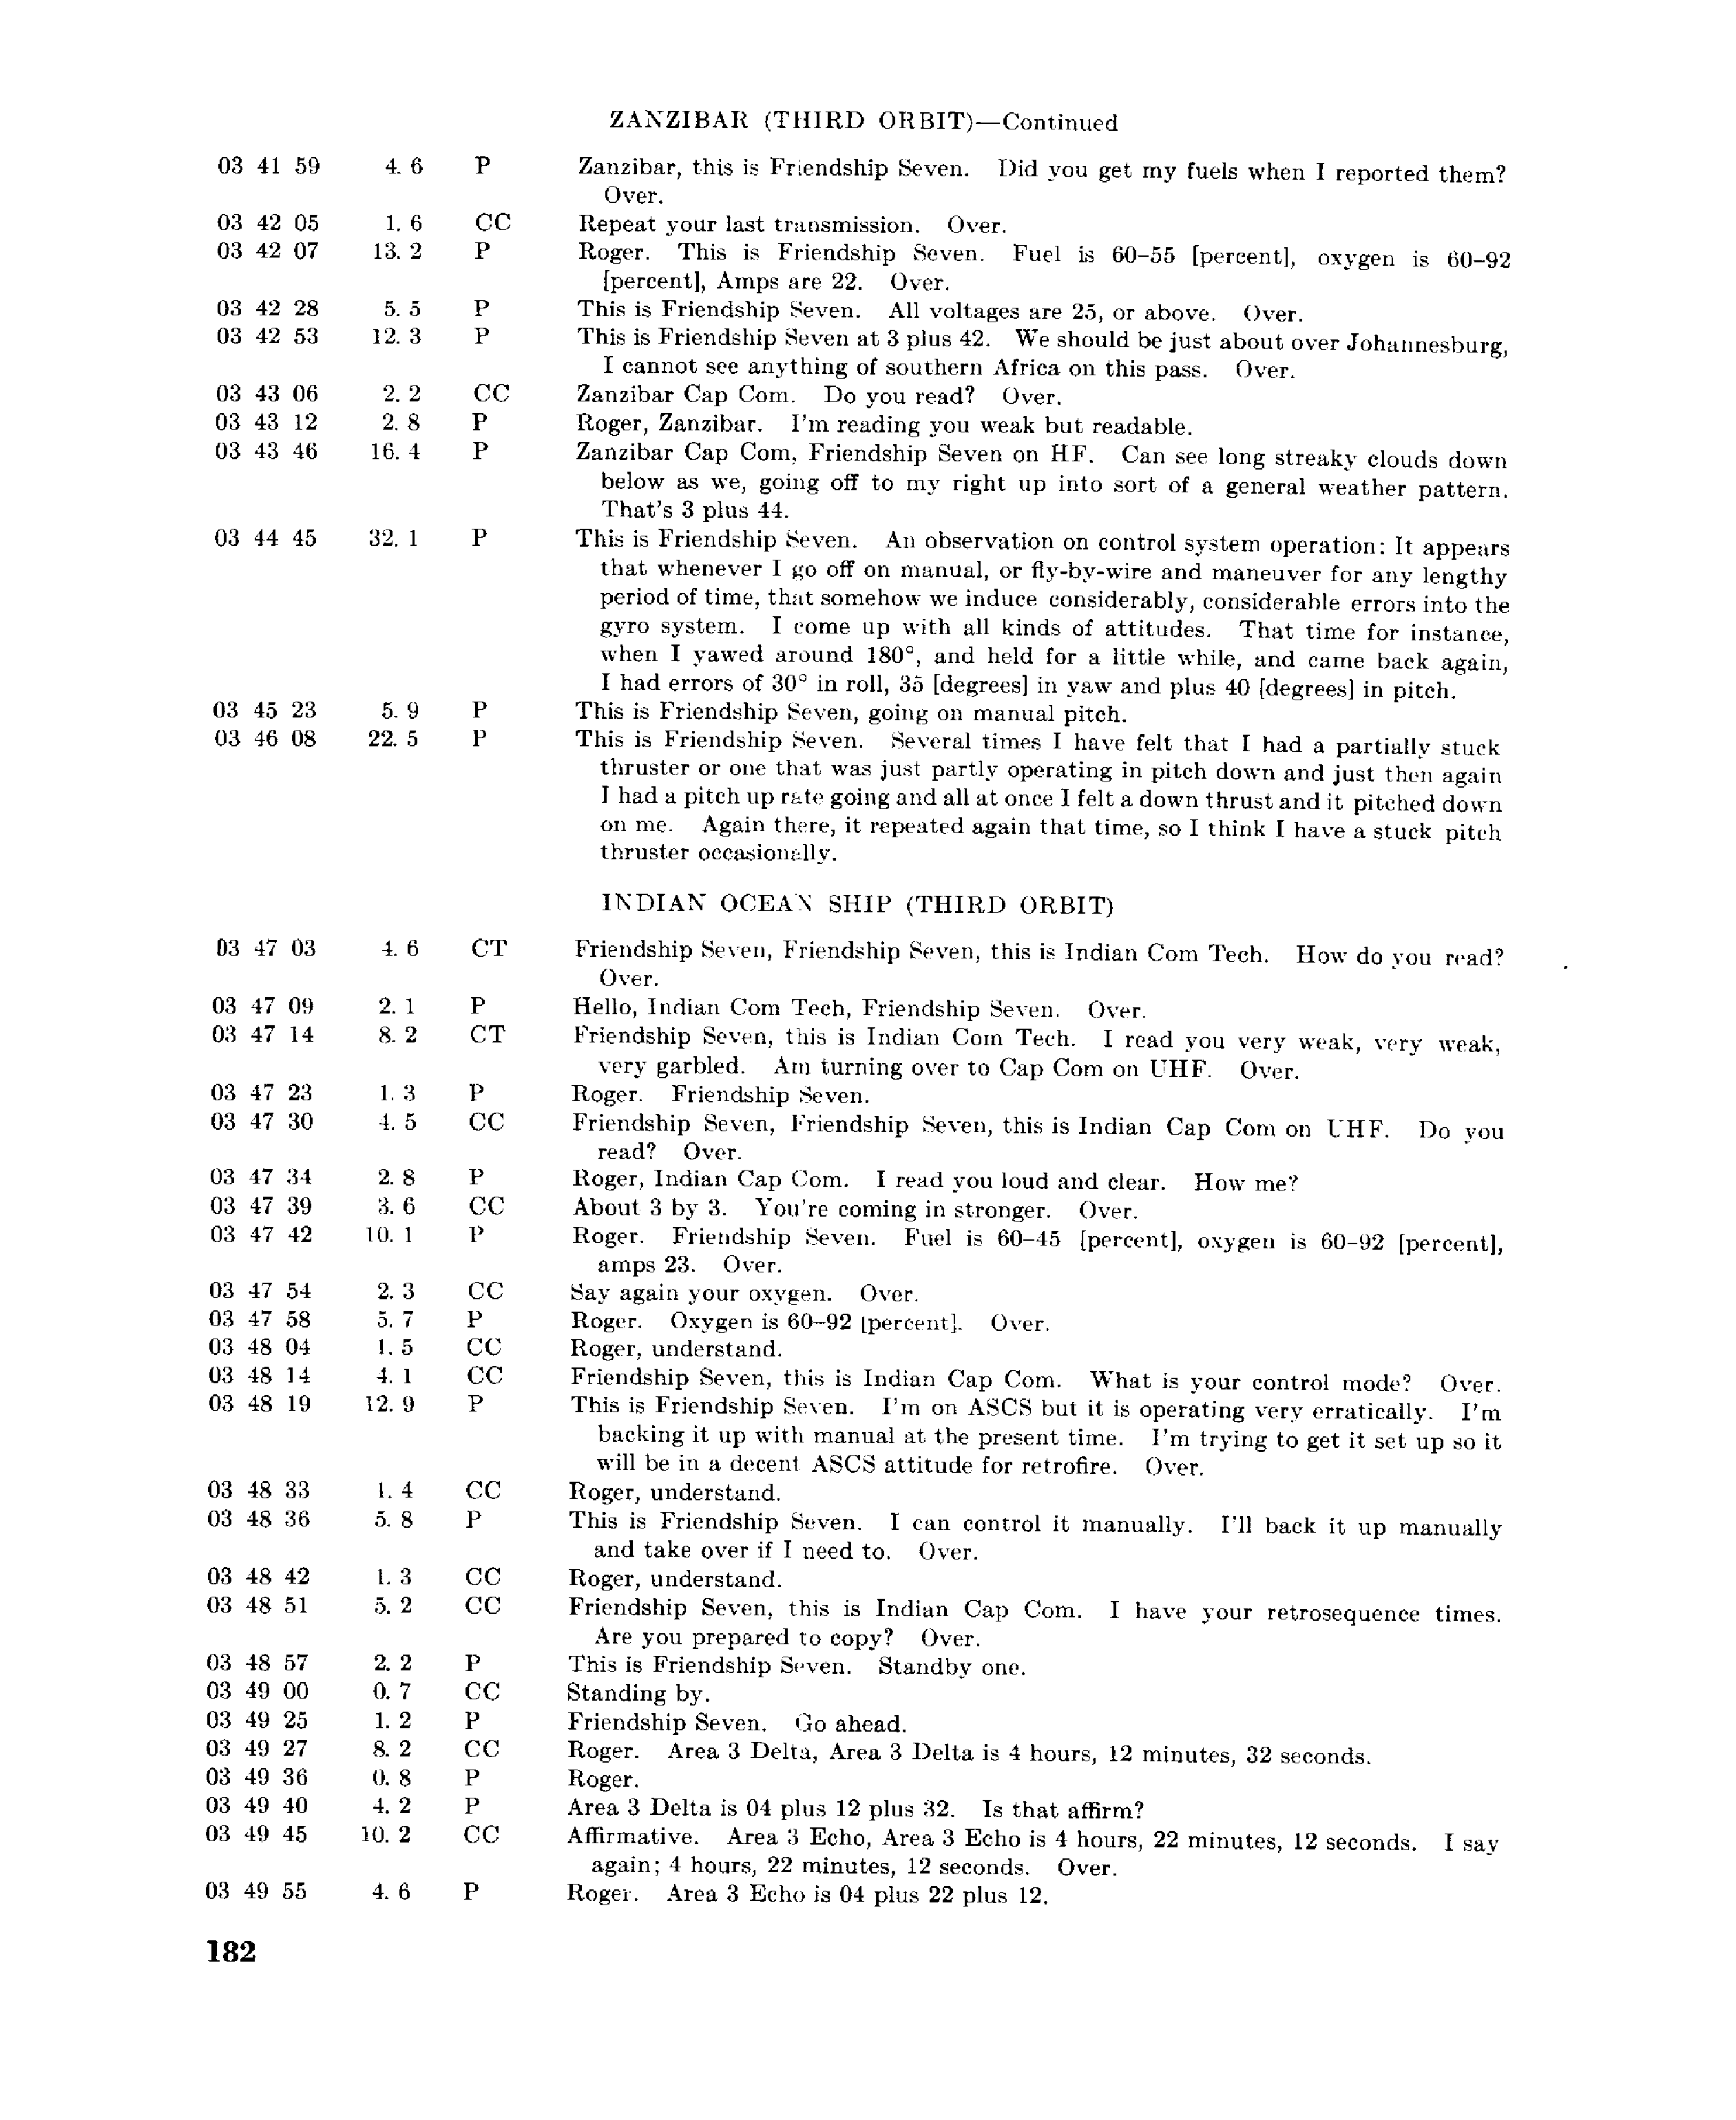 Page 181 of Mercury 6’s original transcript